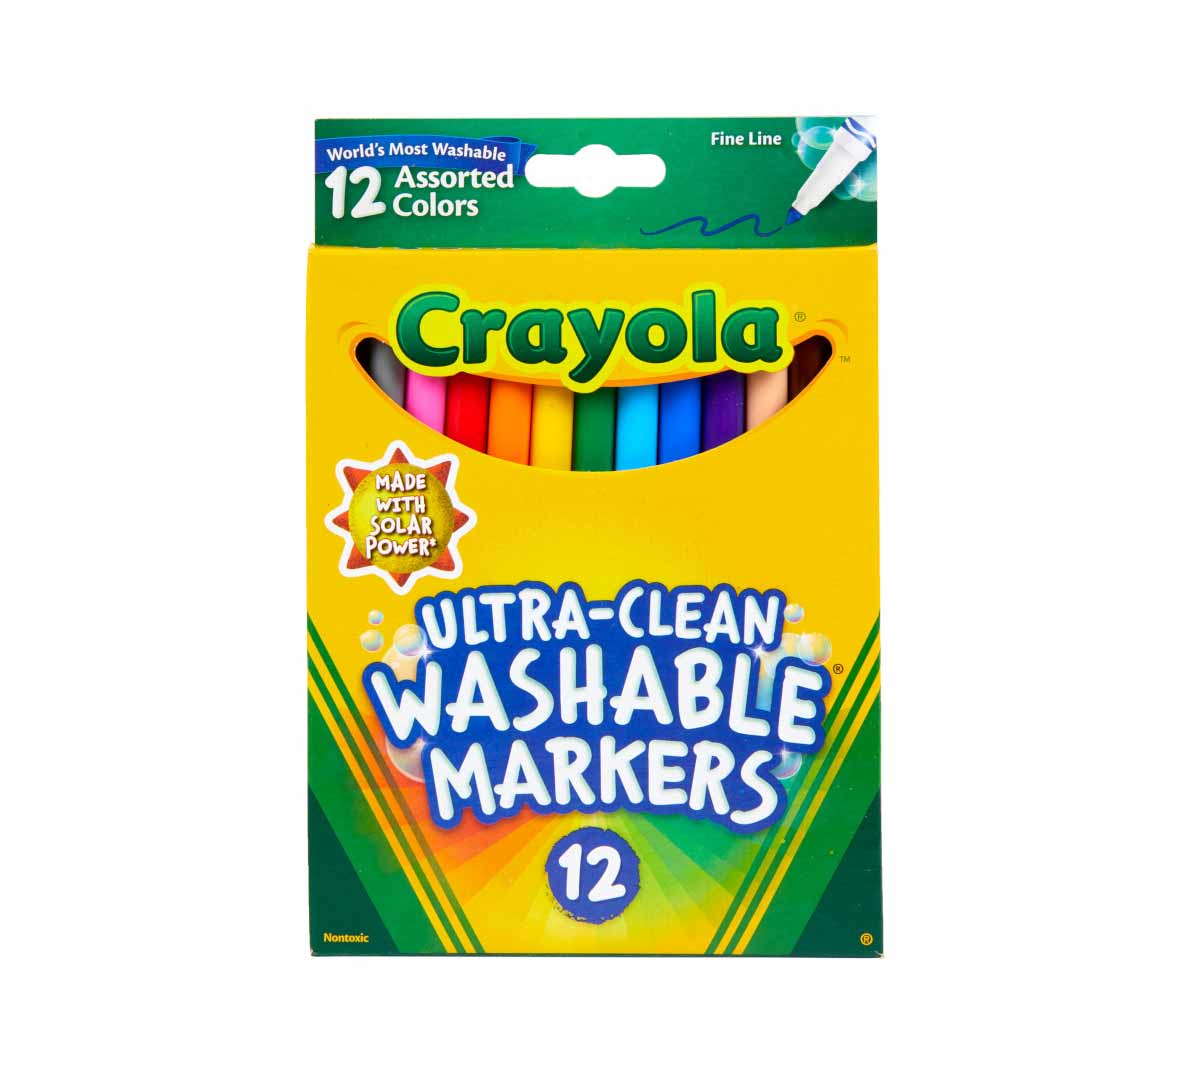 TeachersParadise - Crayola® Fine Line Washable Markers 12 Count